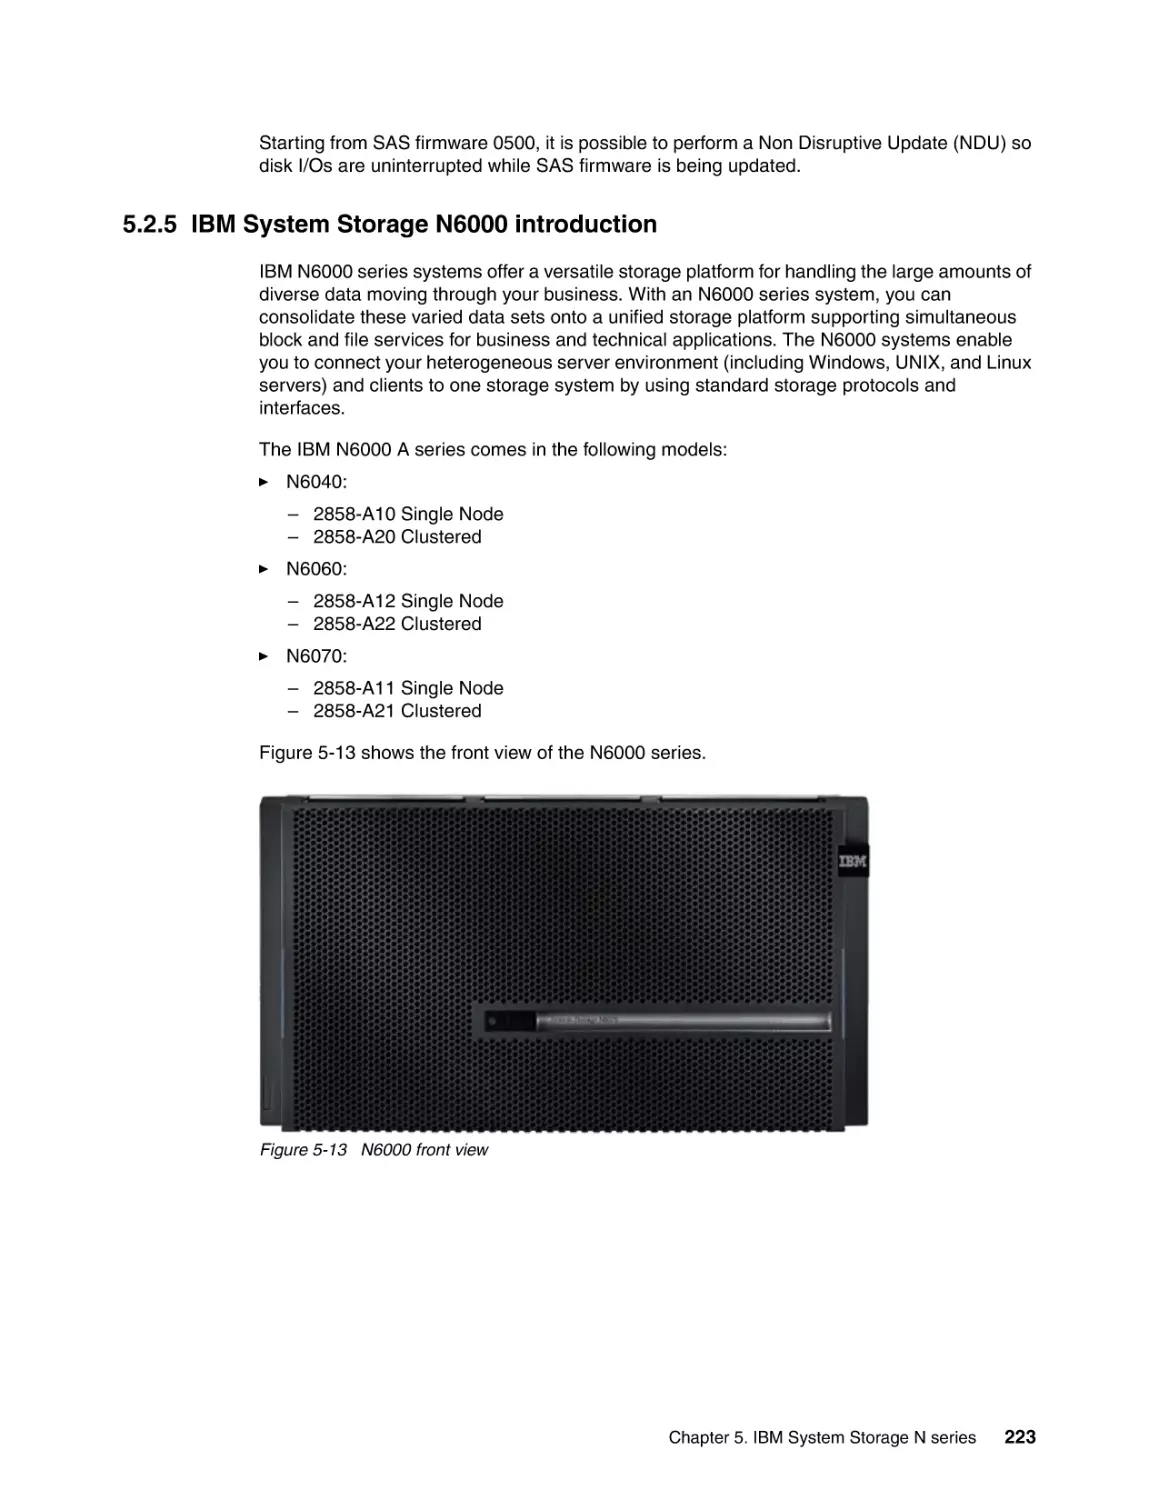 5.2.5 IBM System Storage N6000 introduction